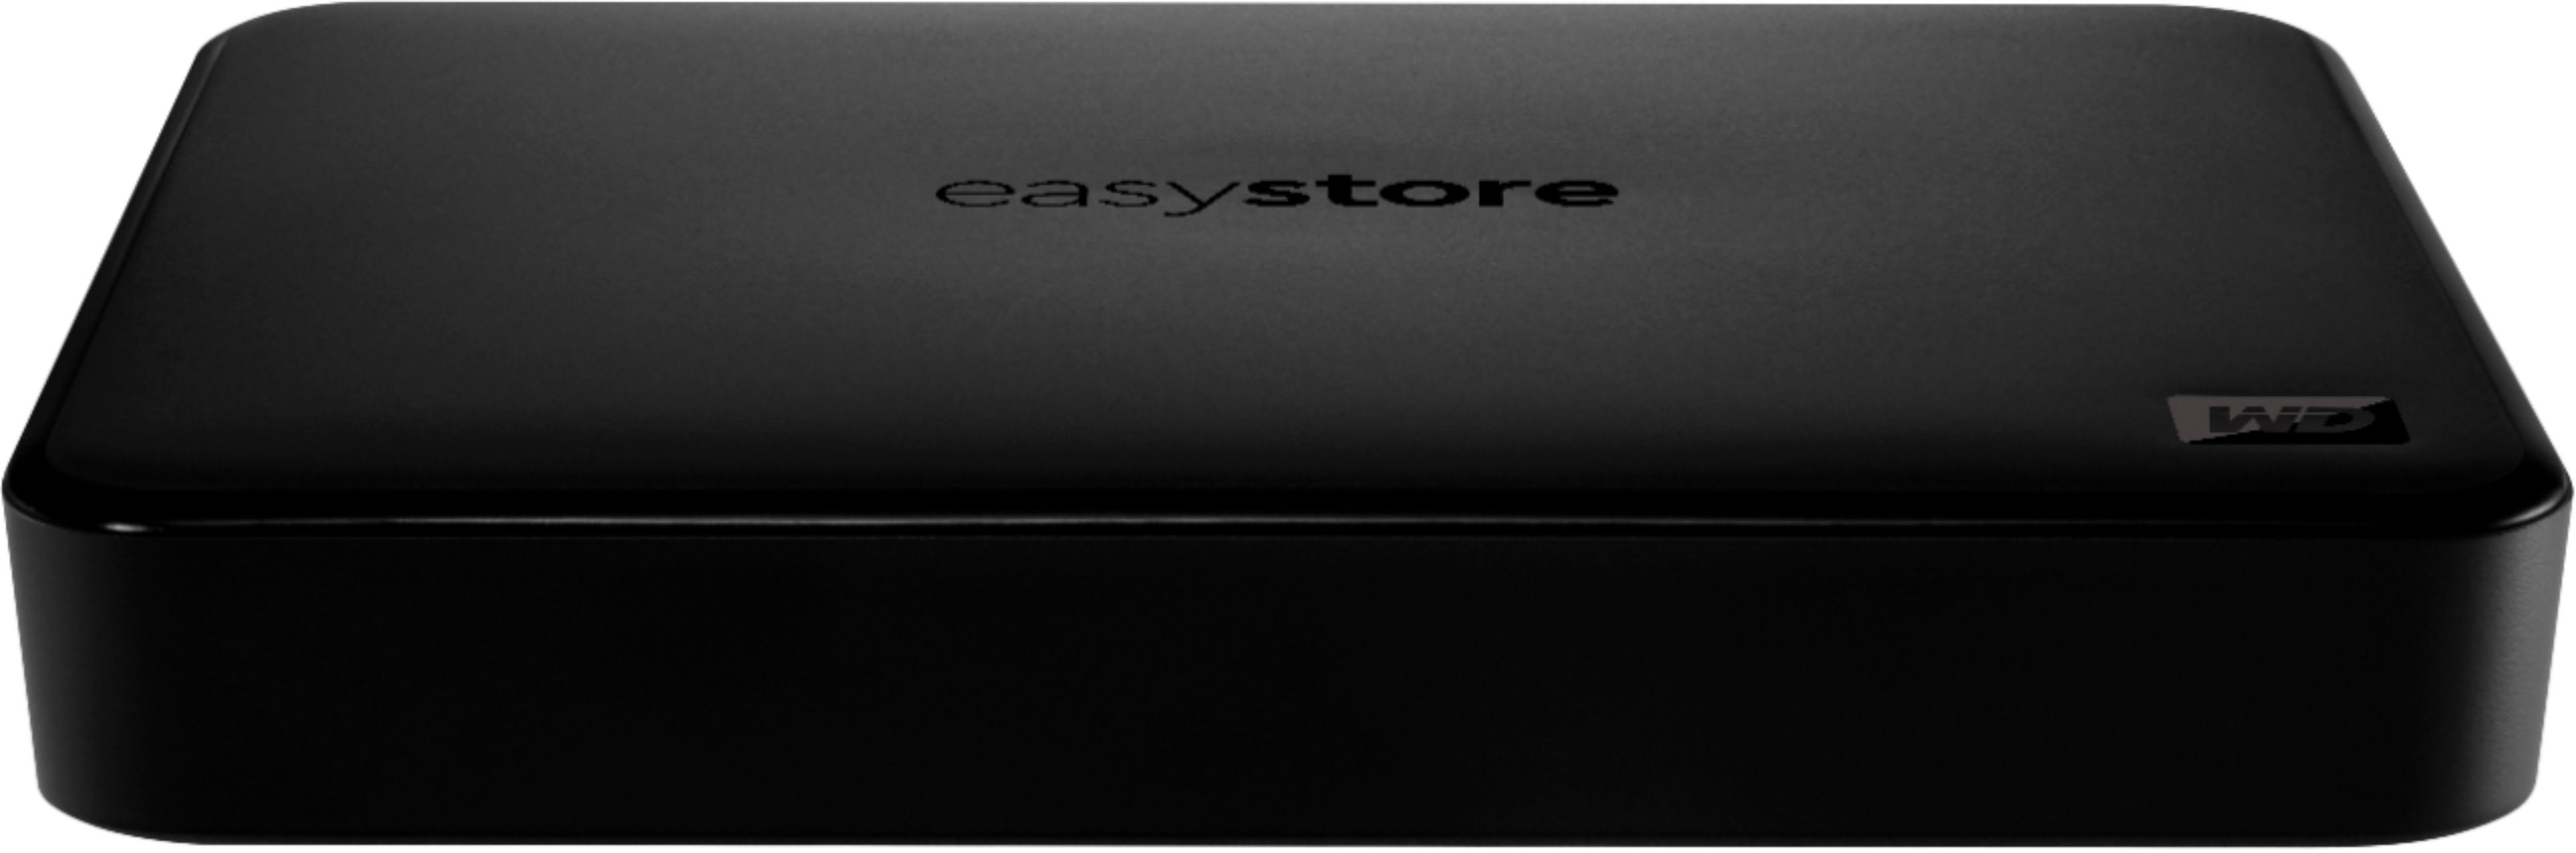 WD - easystore 5TB External USB 3.0 Portable Hard Drive - Black